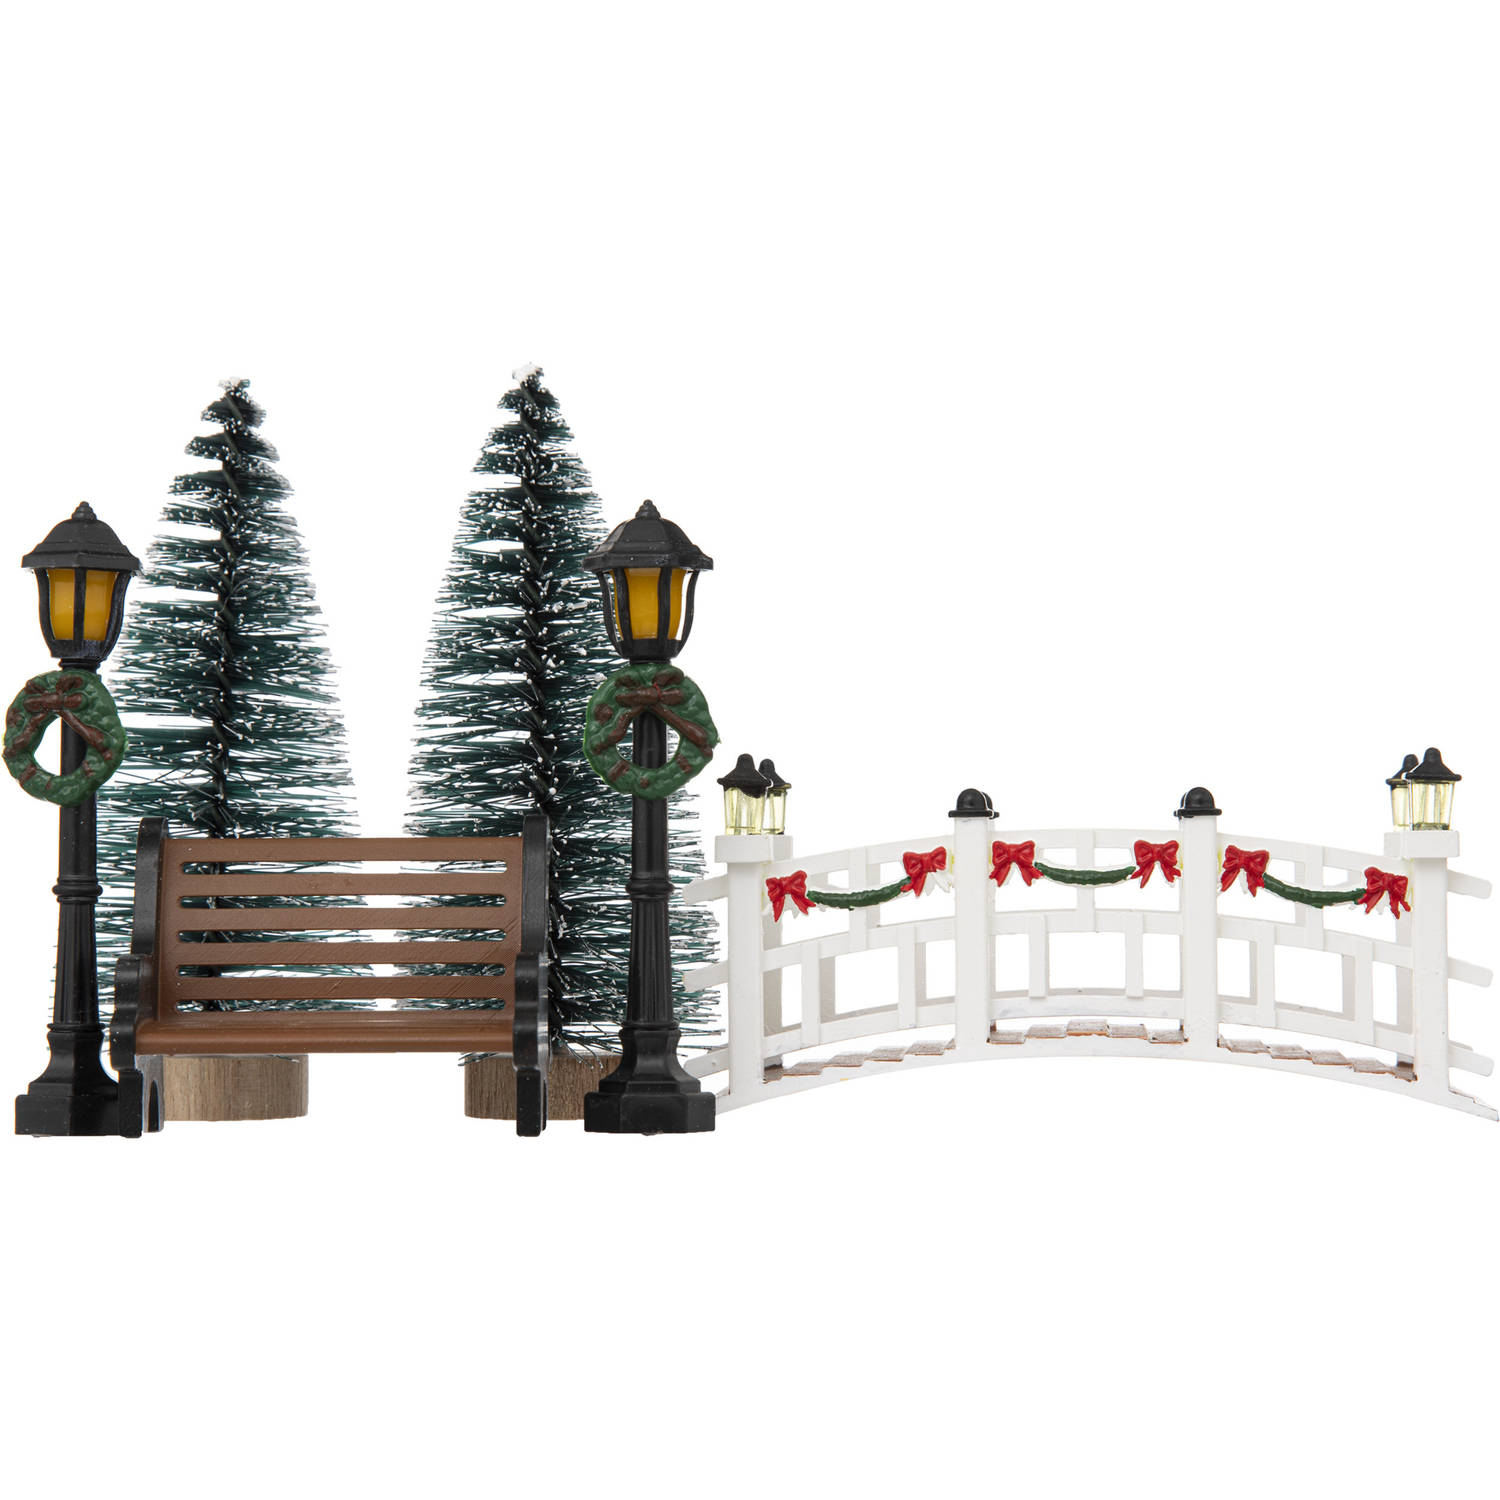 Feeric lights and christmas kerstdorp accessoires-miniatuur figuurtjes Kerstdorpen